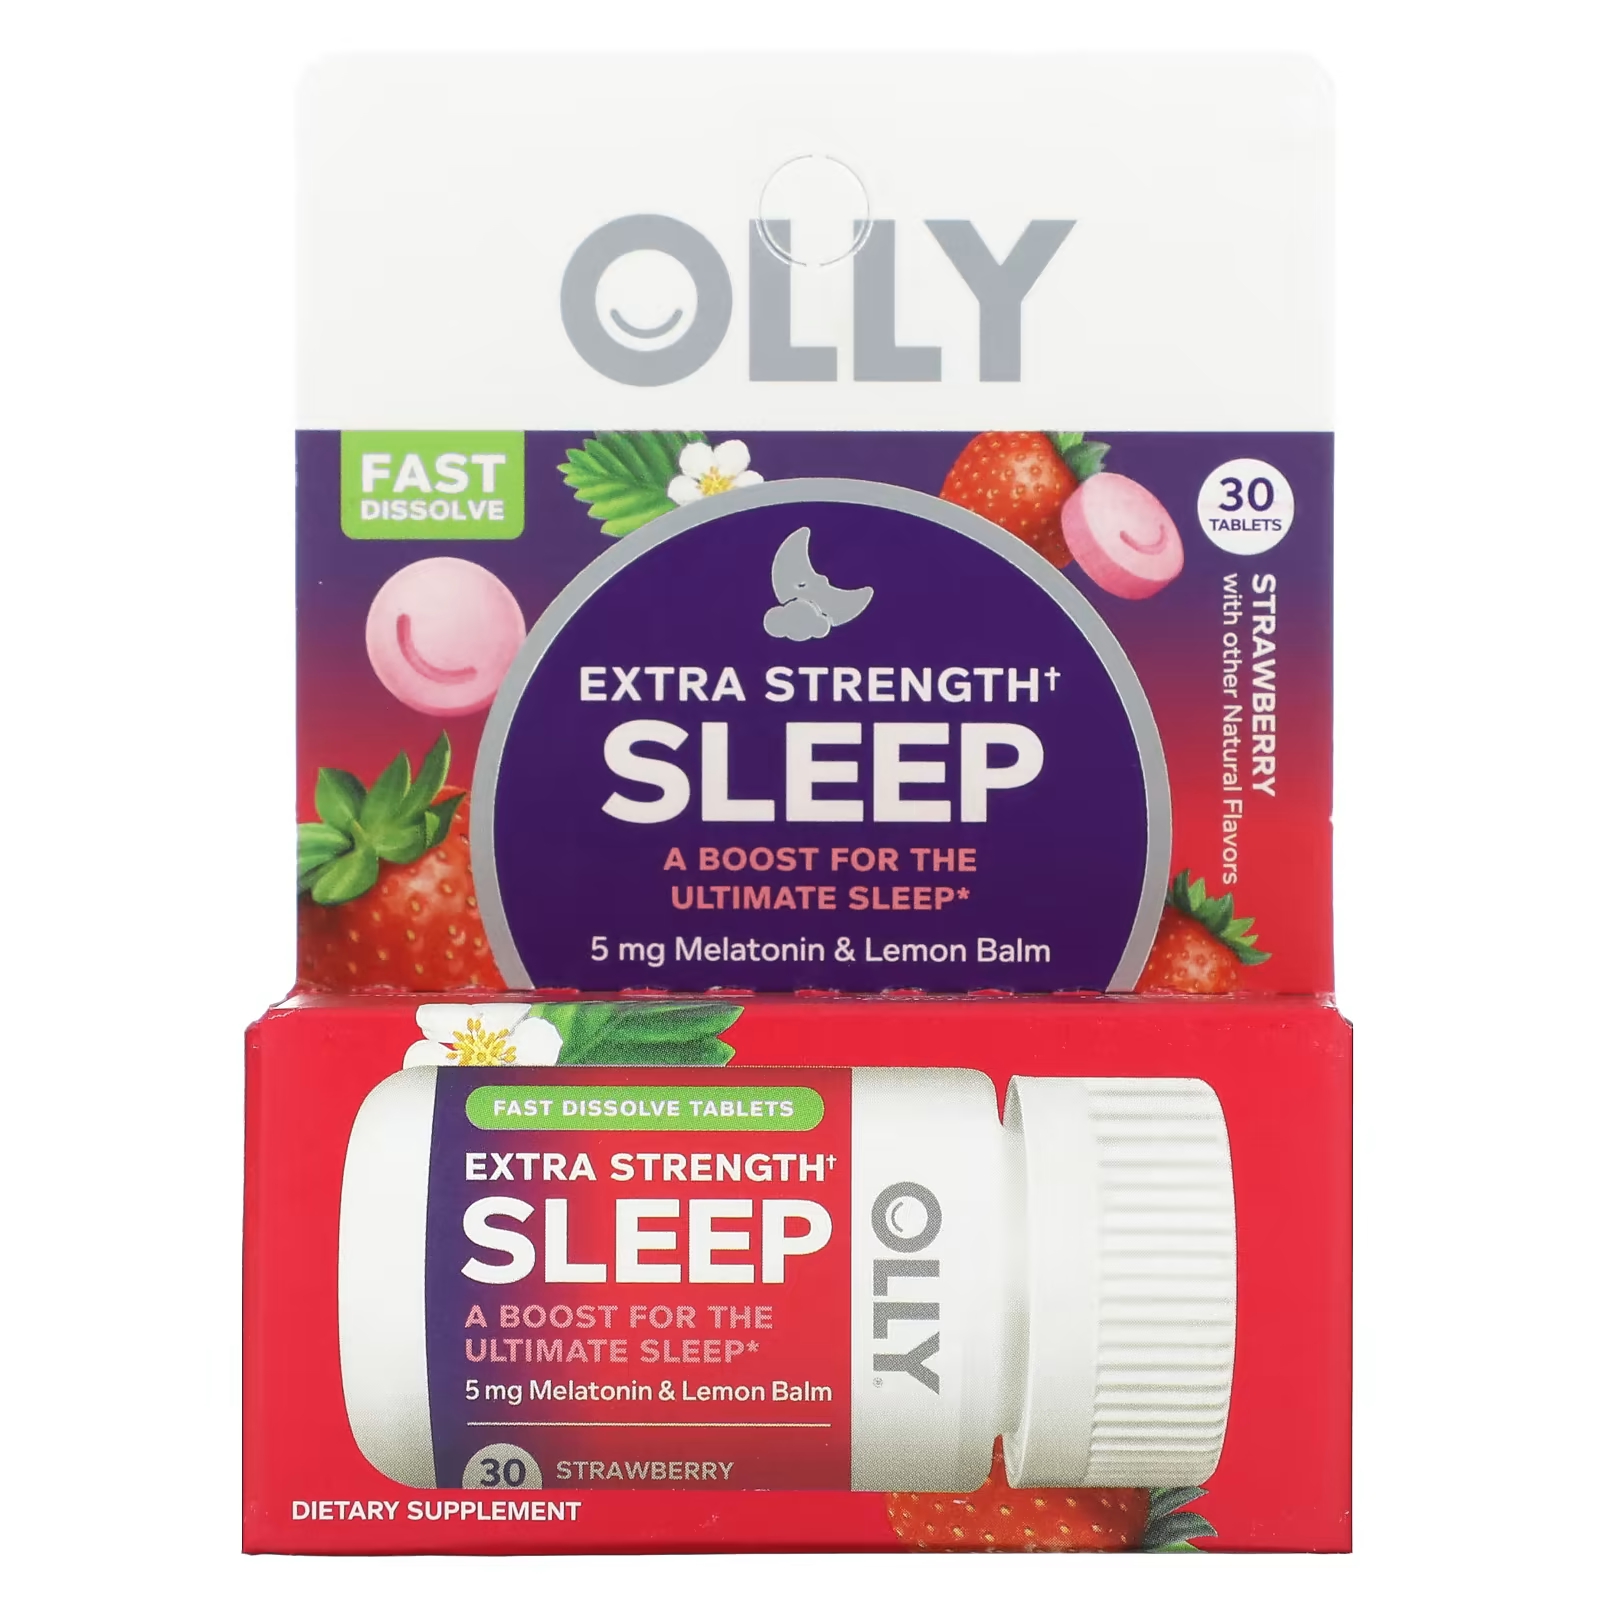 Пищевая добавка Olly Sleep Extra Strength клубника, 30 таблеток пищевая добавка olly sleep клубника 30 таблеток